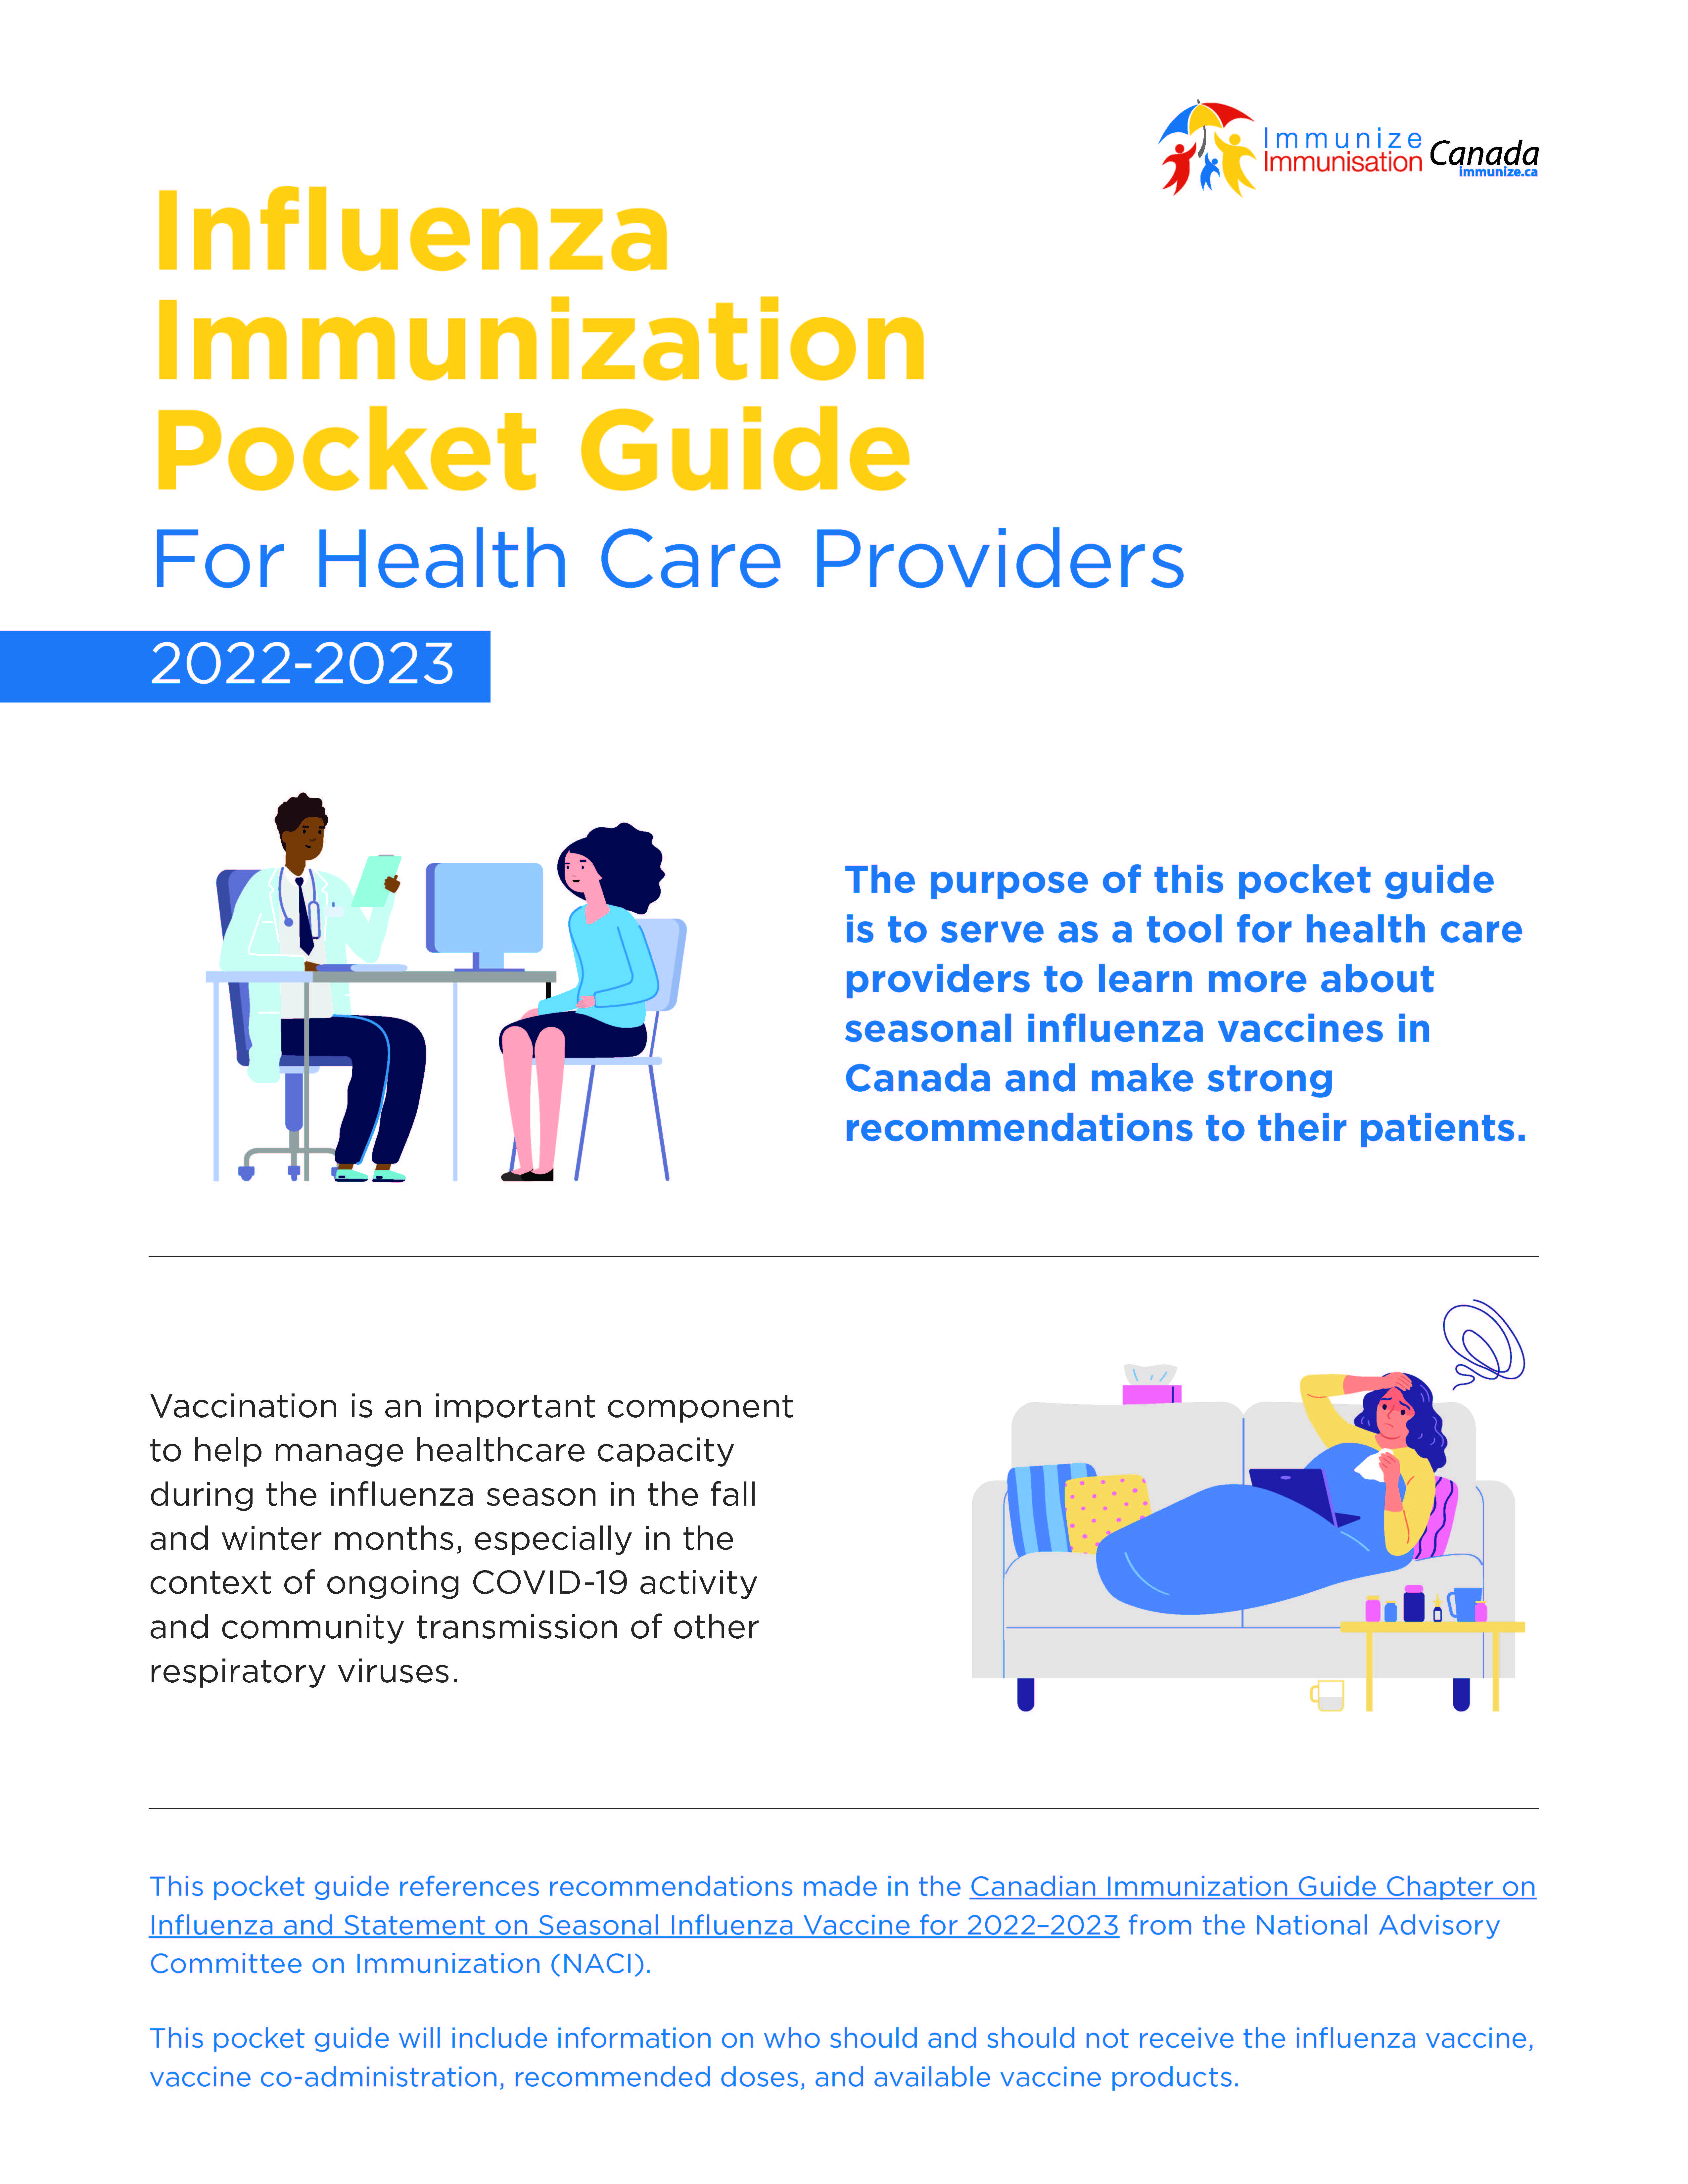 Influenza Immunization Guide for Health Care Providers 2022-2023